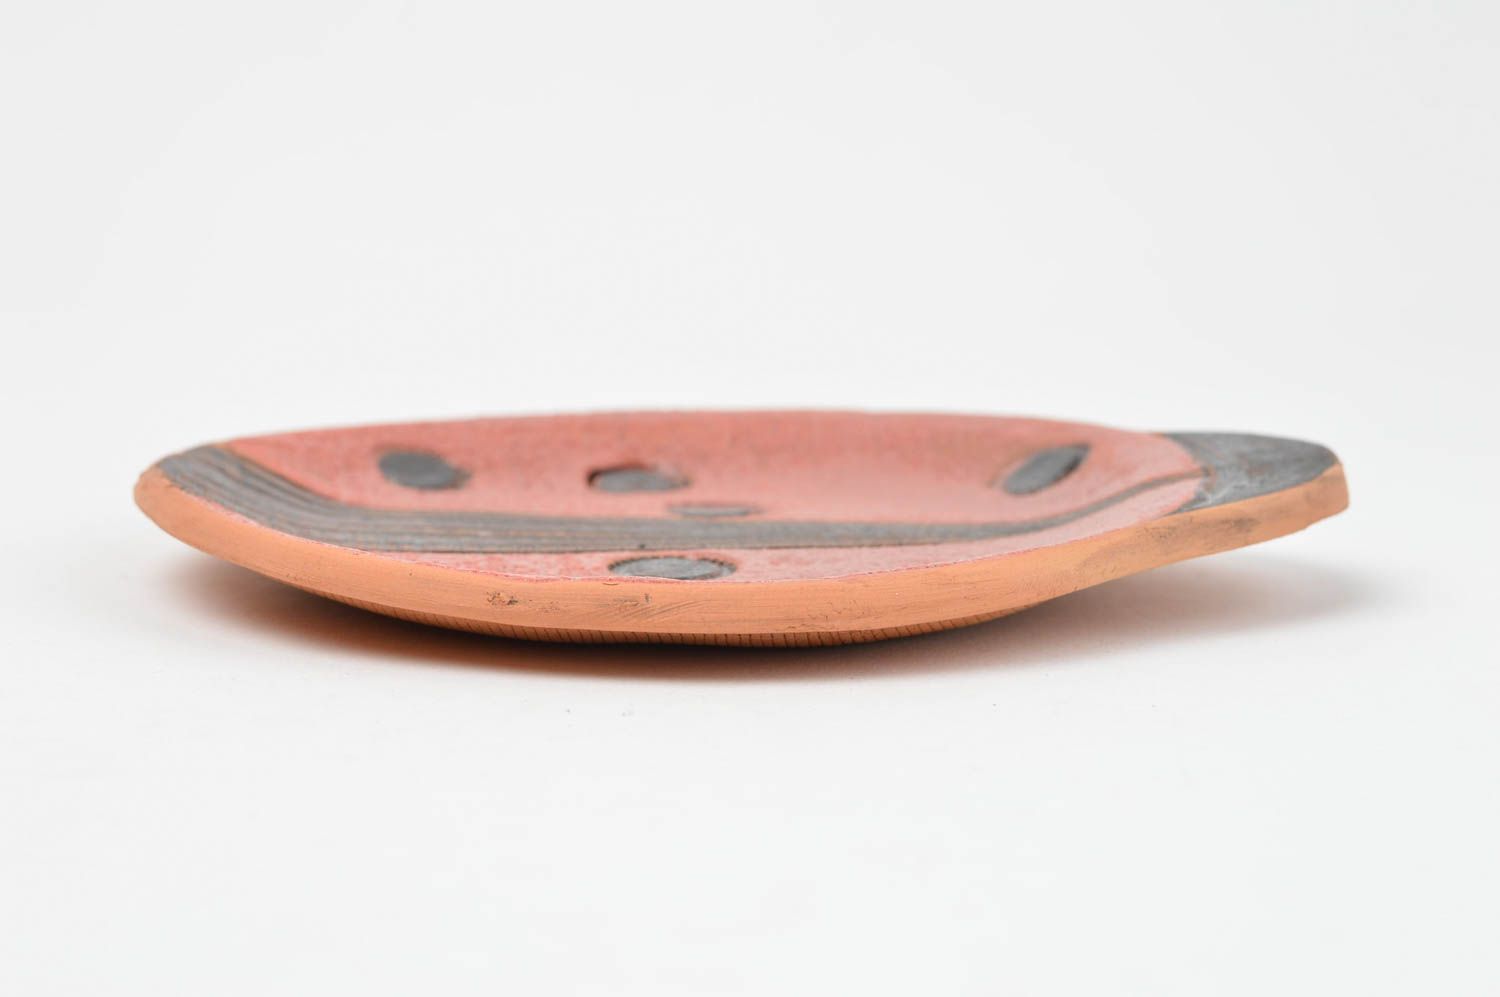 Beautiful handmade ceramic plate decorative clay plate designs gift ideas photo 3